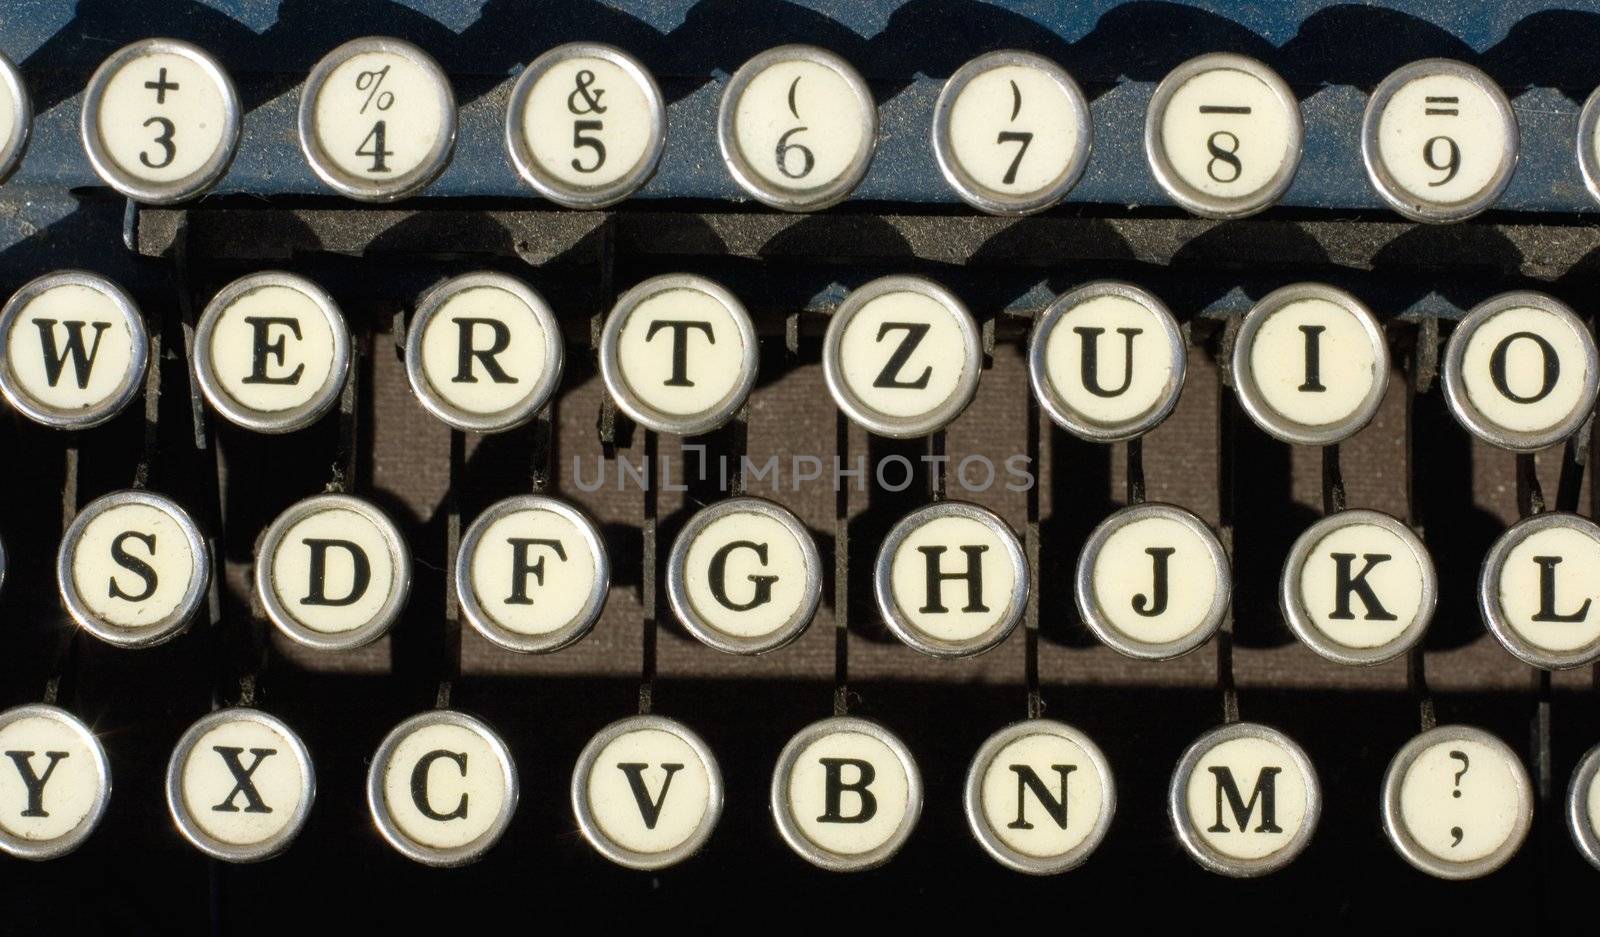 Antique typewriter keys on black useful for background